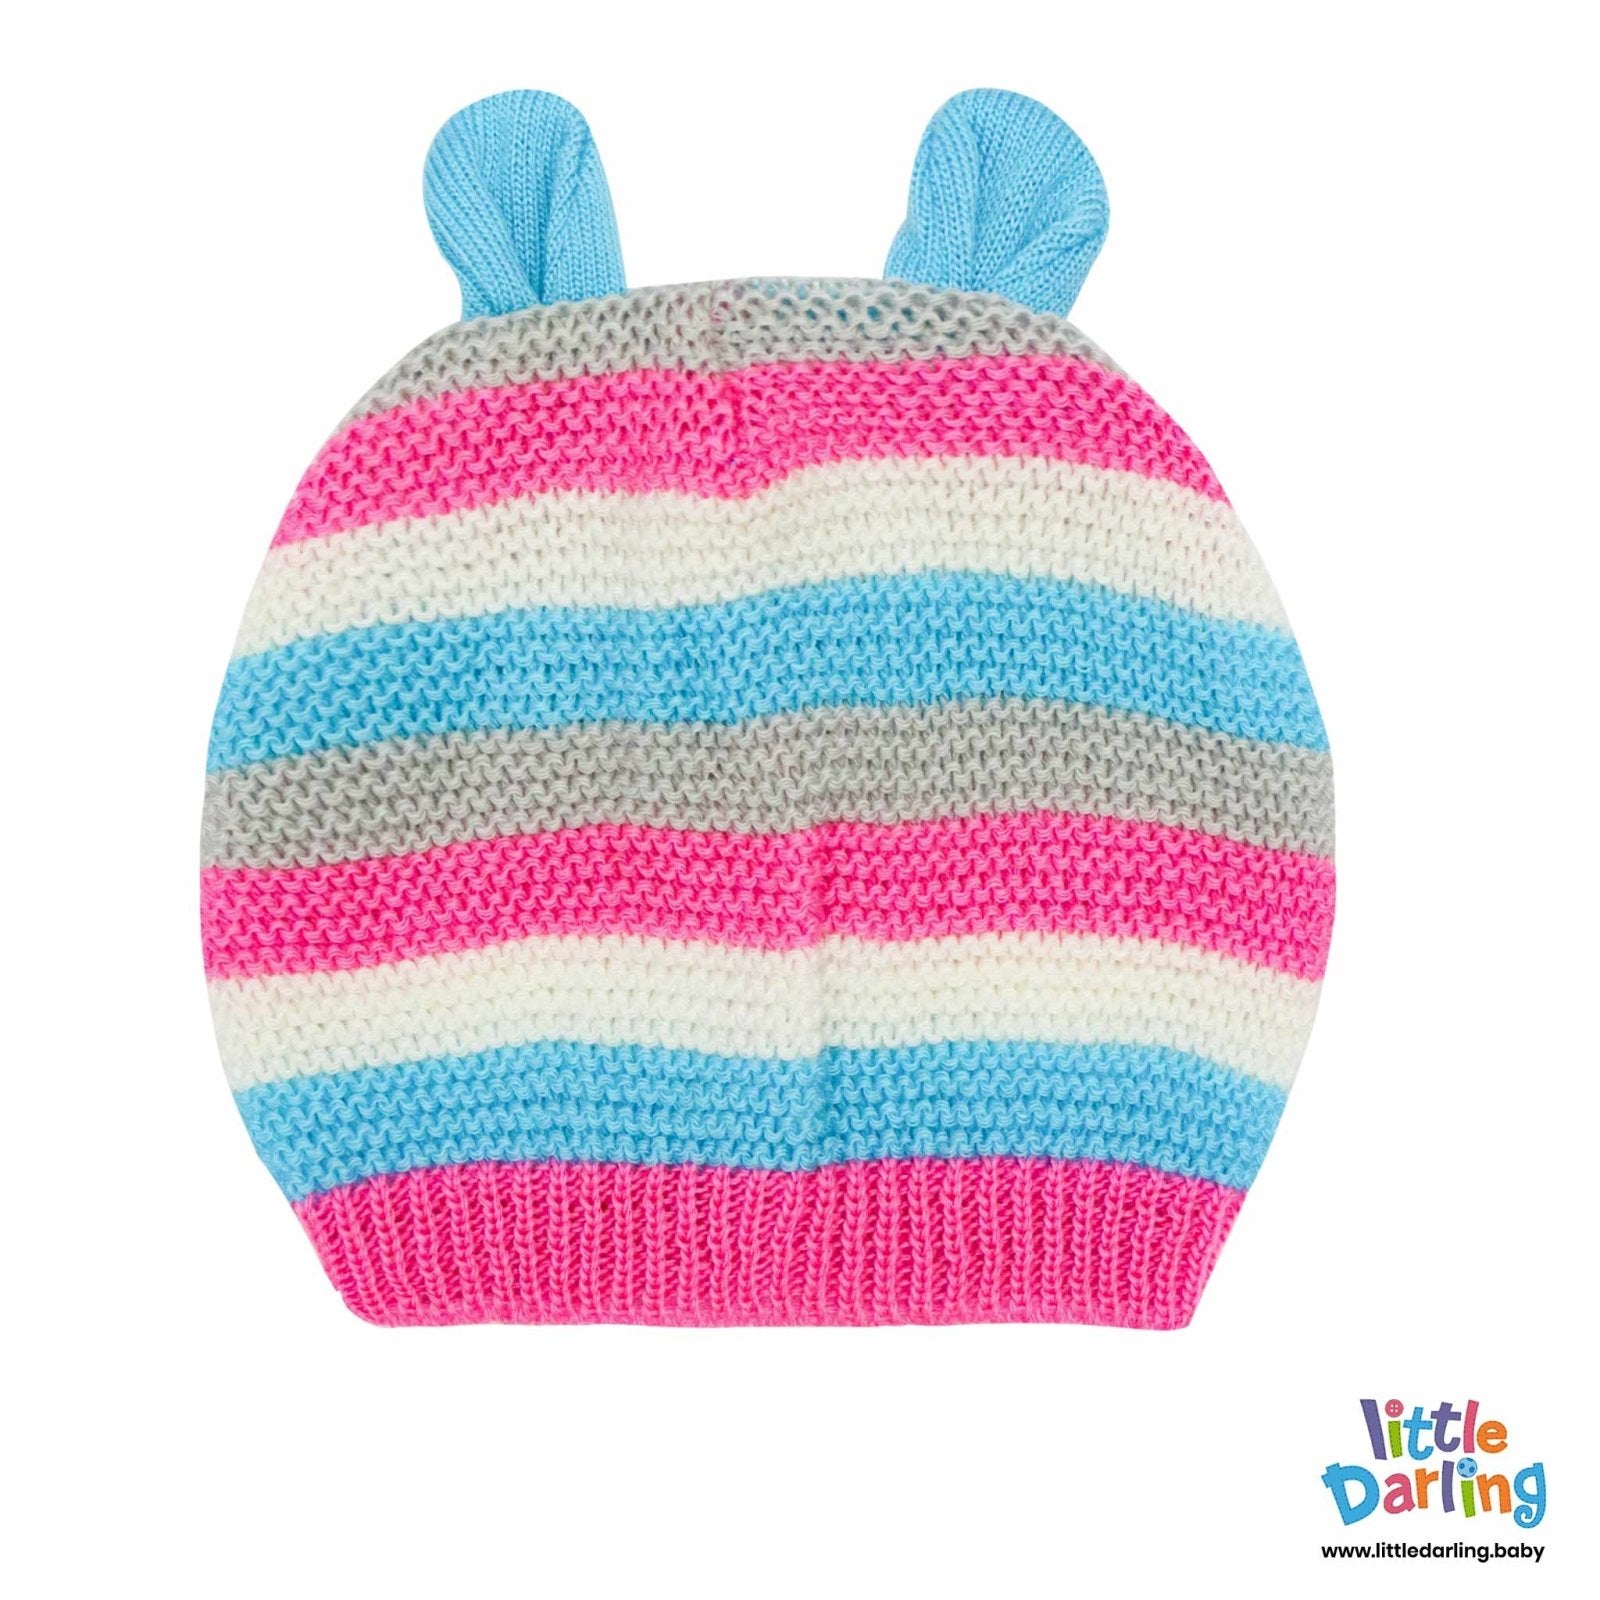 4 Pcs Woolen Gift Set Blue & Pink Stripes by Little Darling